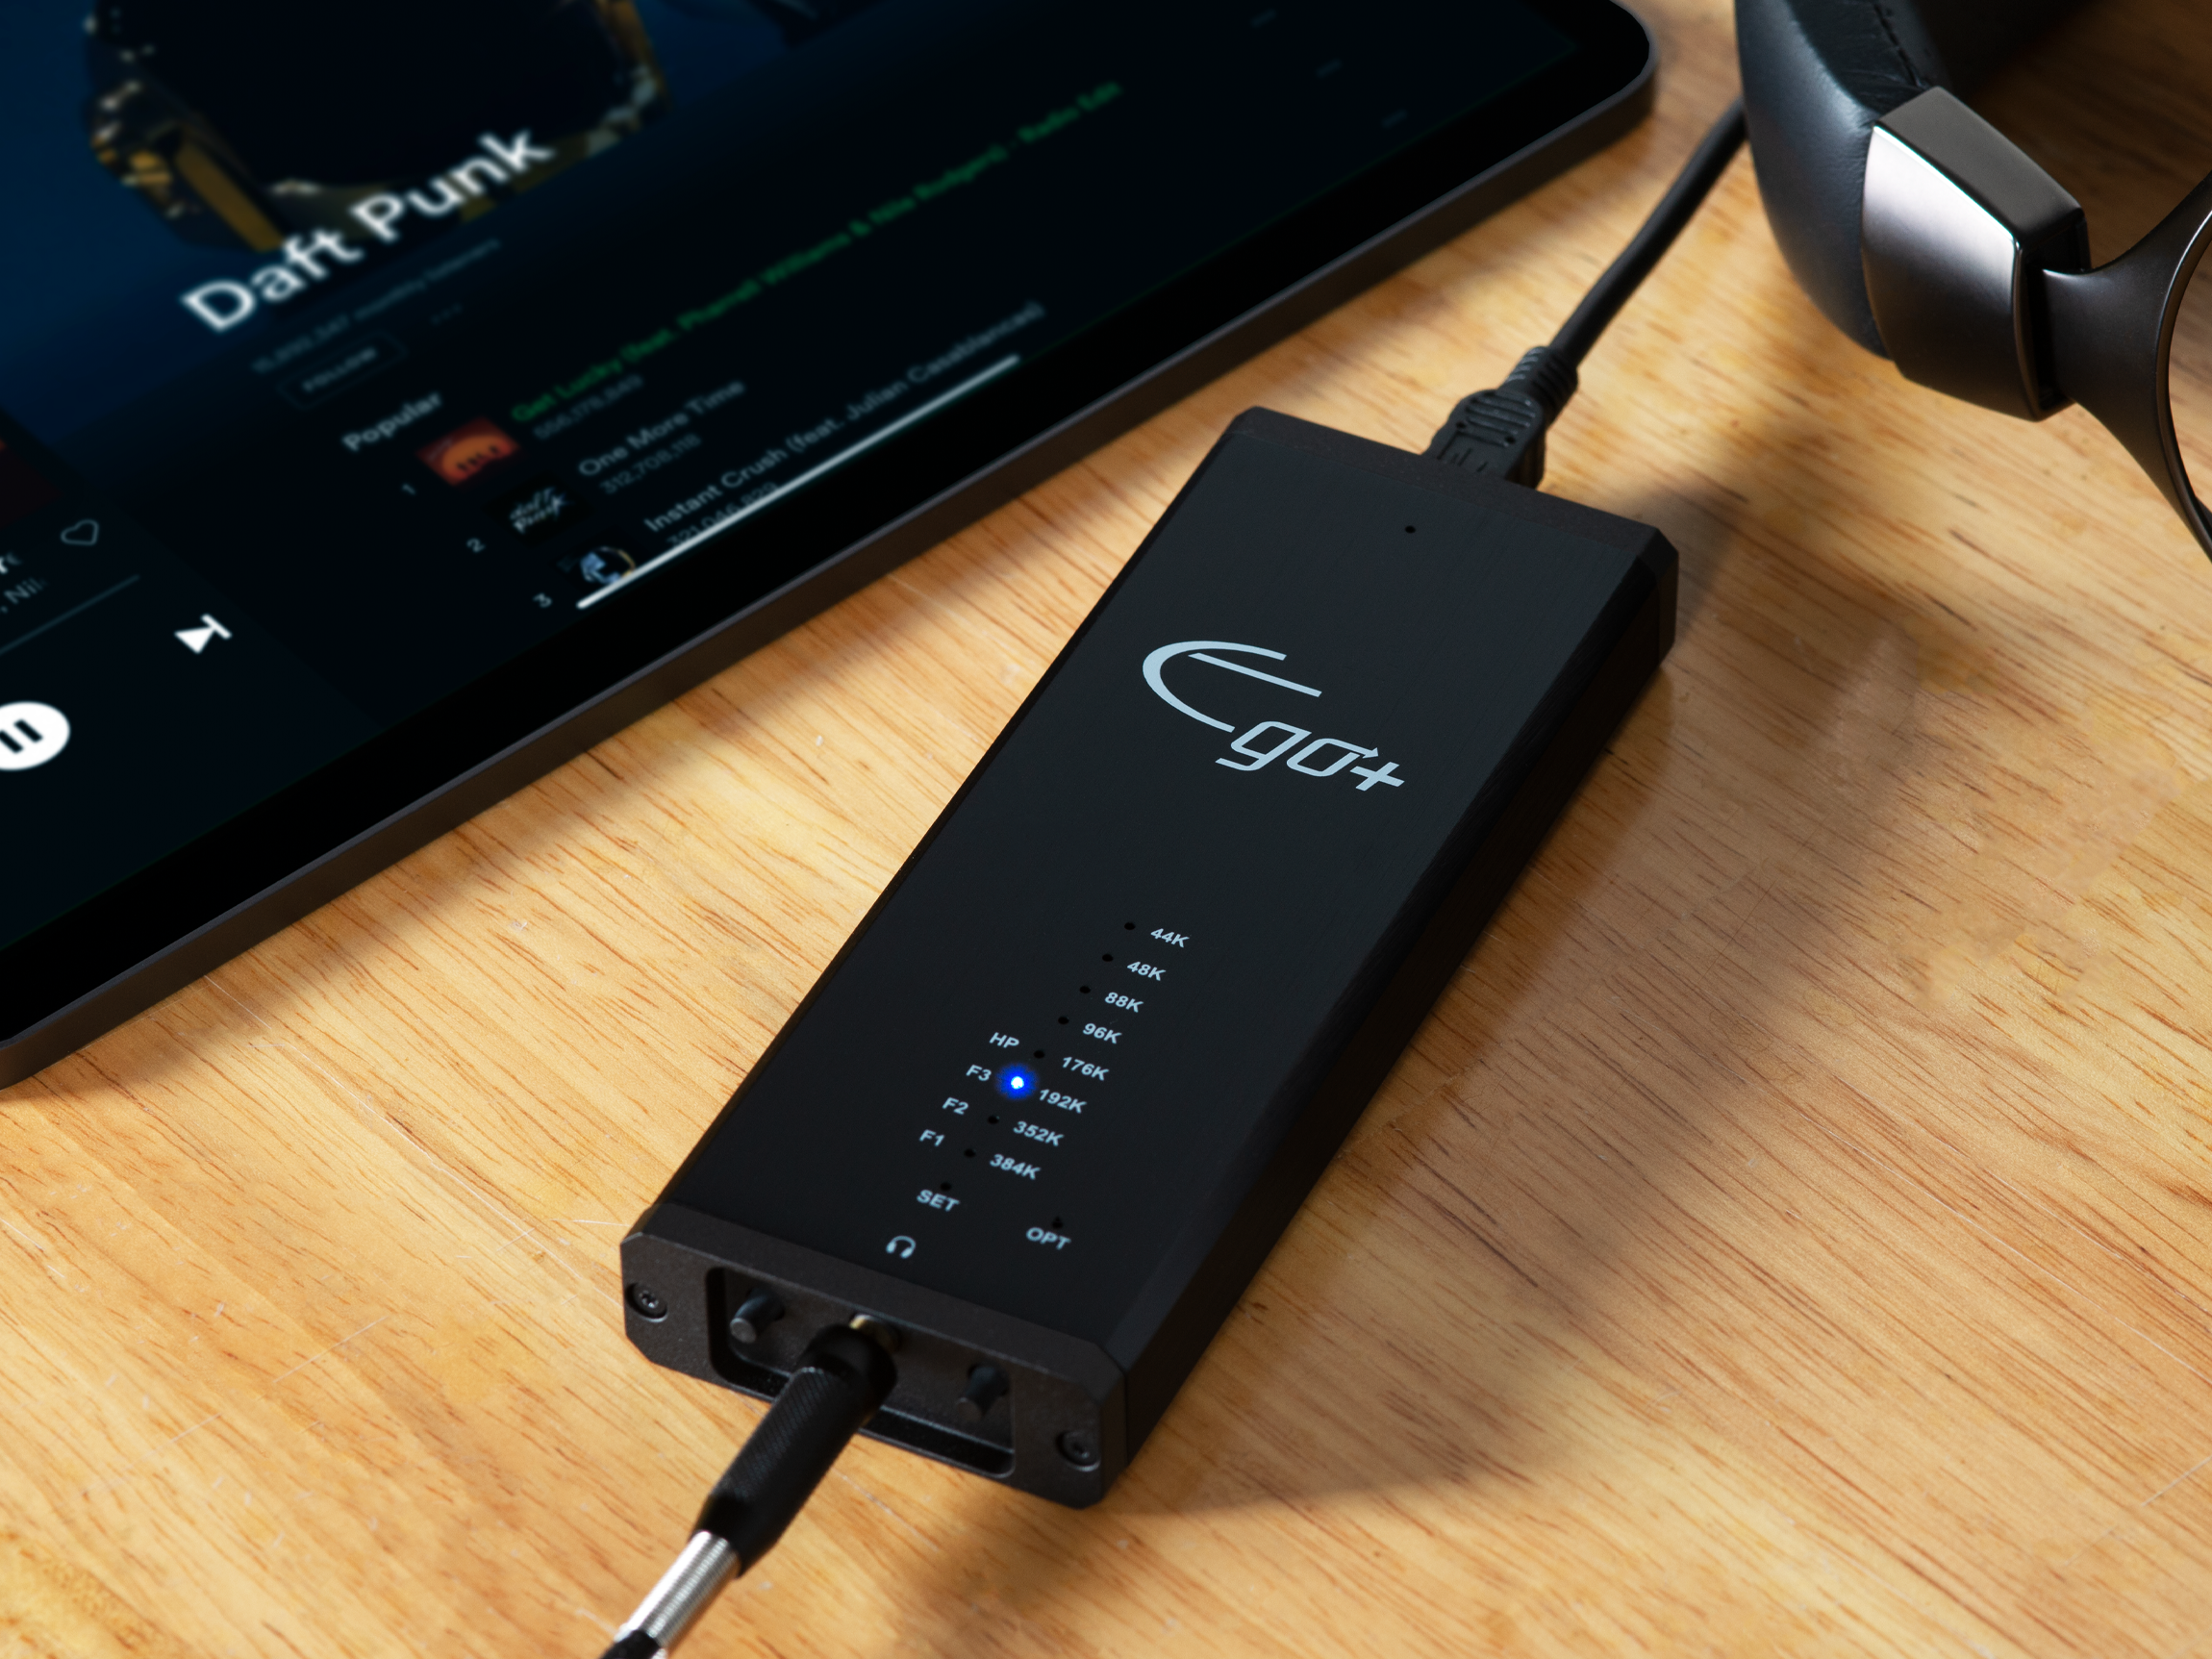 Adaptador Cable Conector Lightning a Usb 3 Camara iPad iPhone – iCenter  Colombia